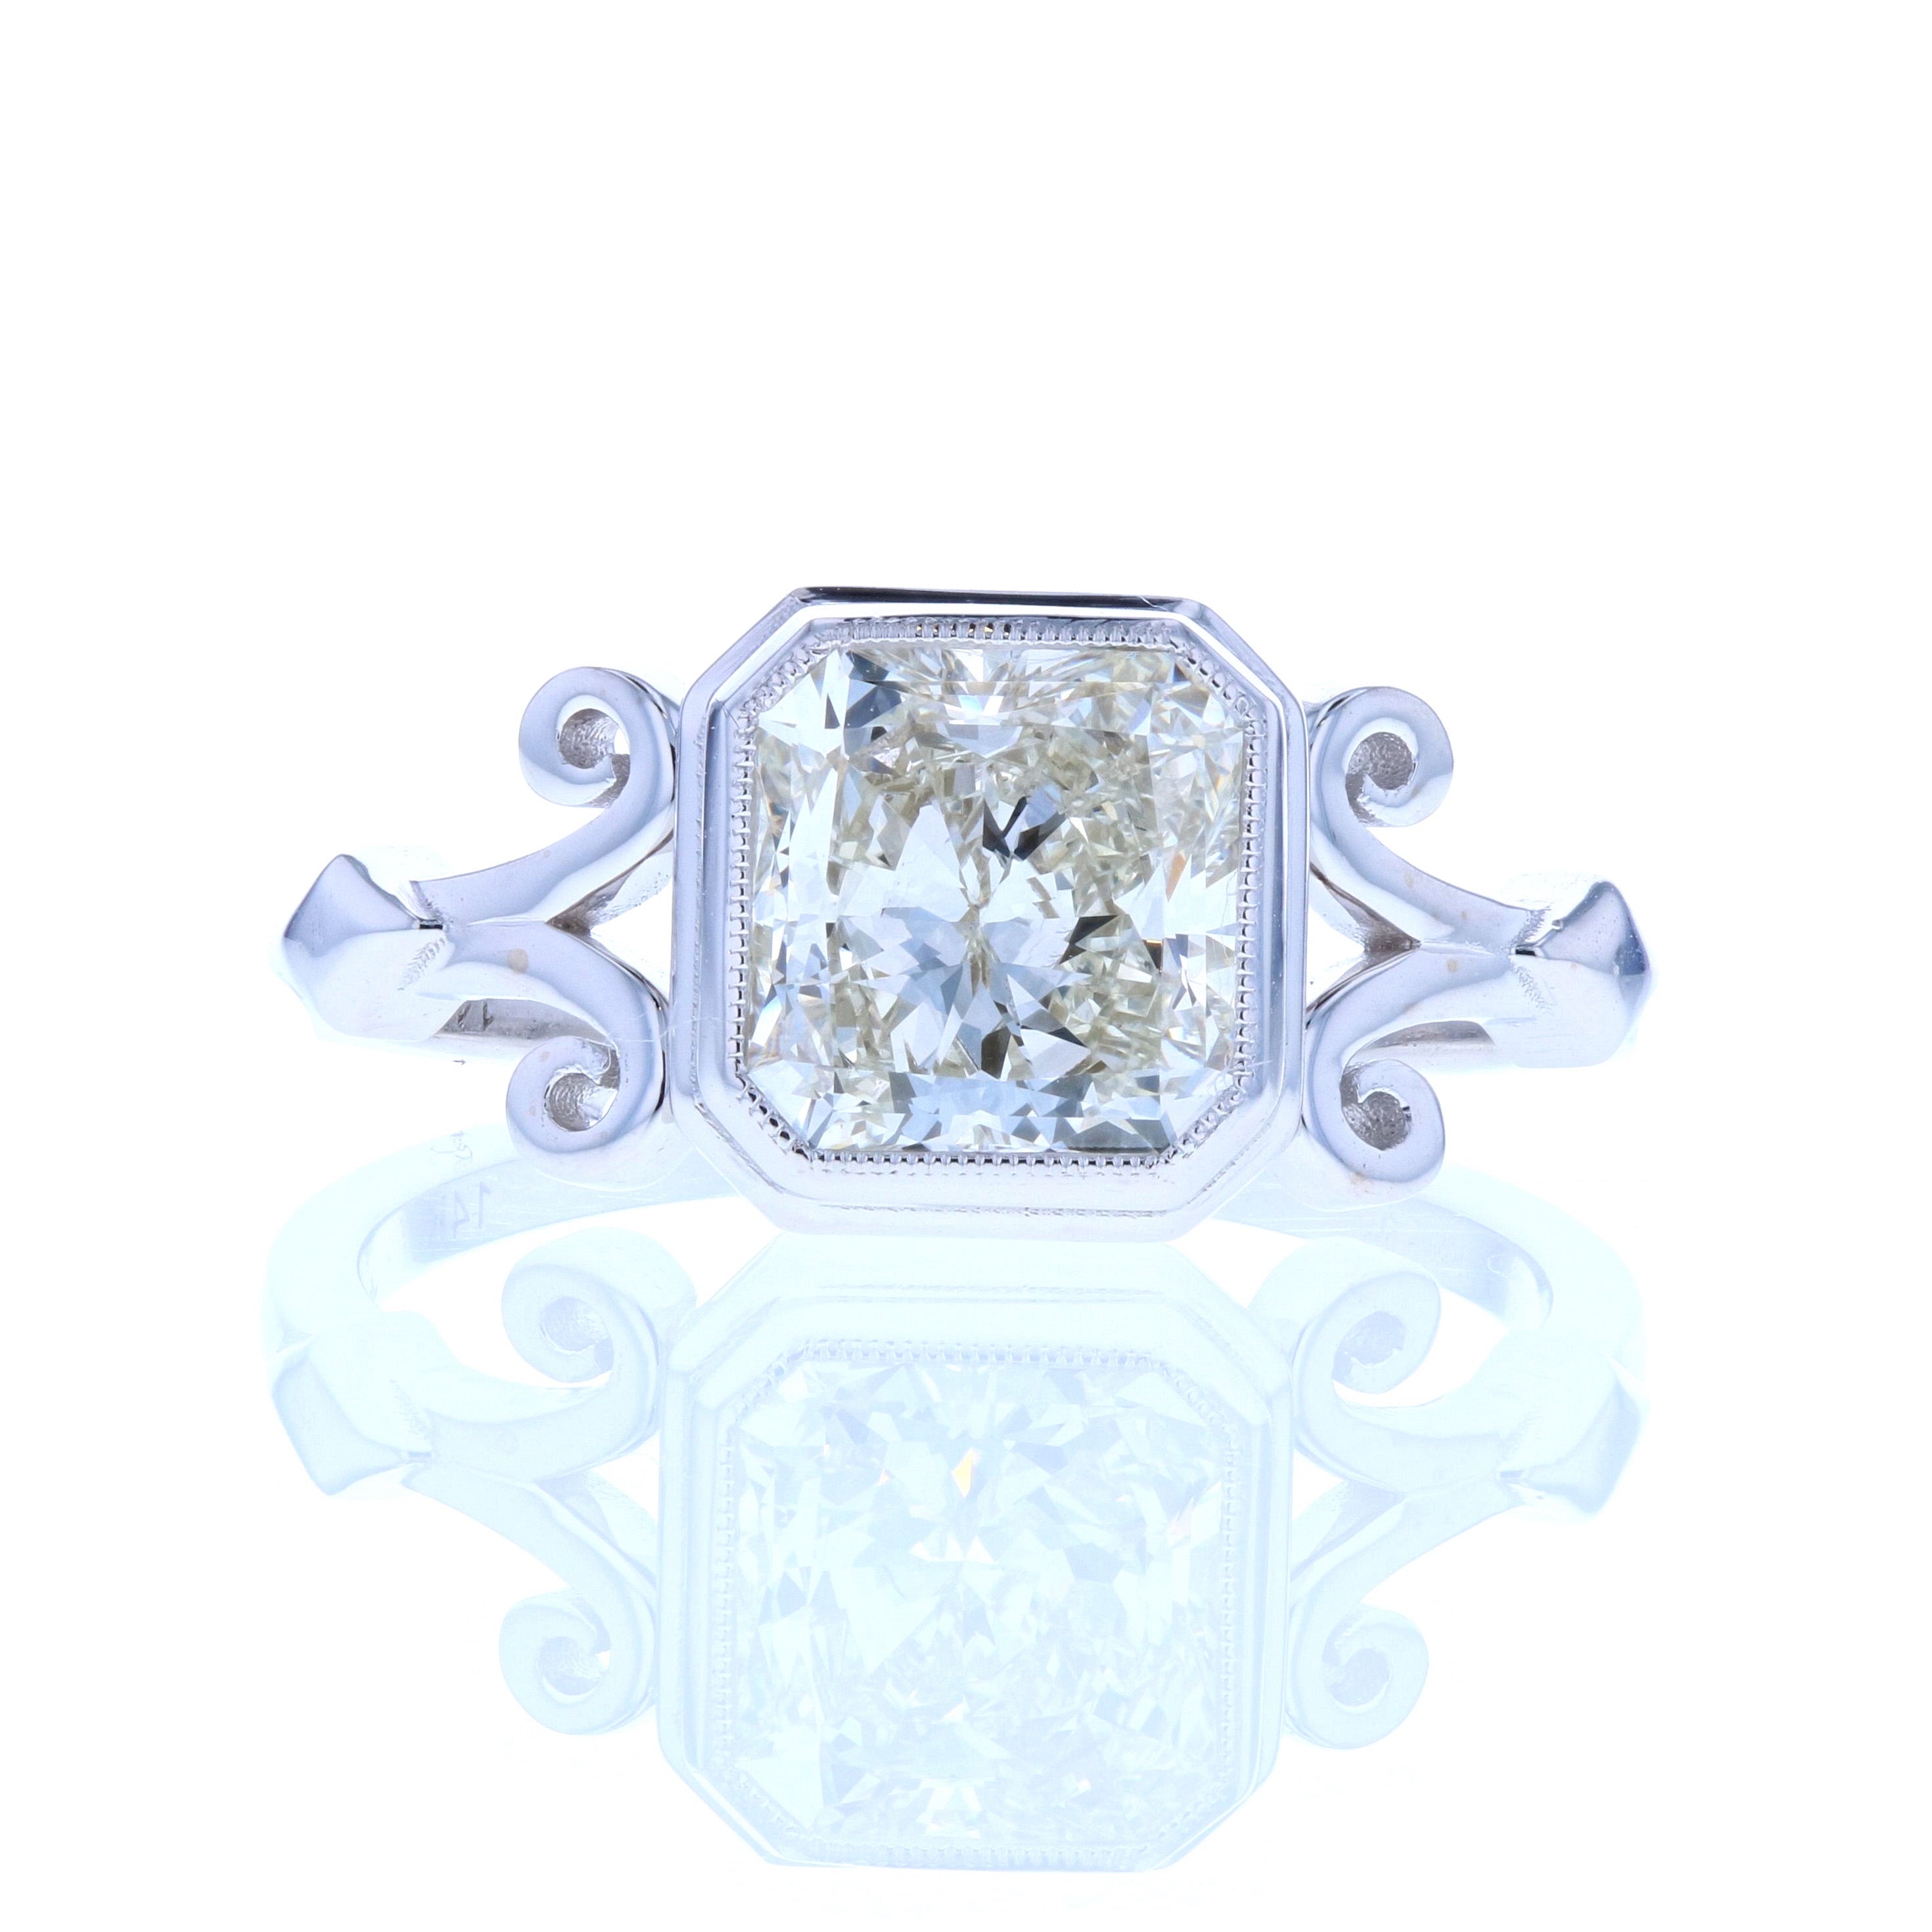 Radiant Cut Diamond Engagement Ring with Bezel Setting & Art Deco Detailing